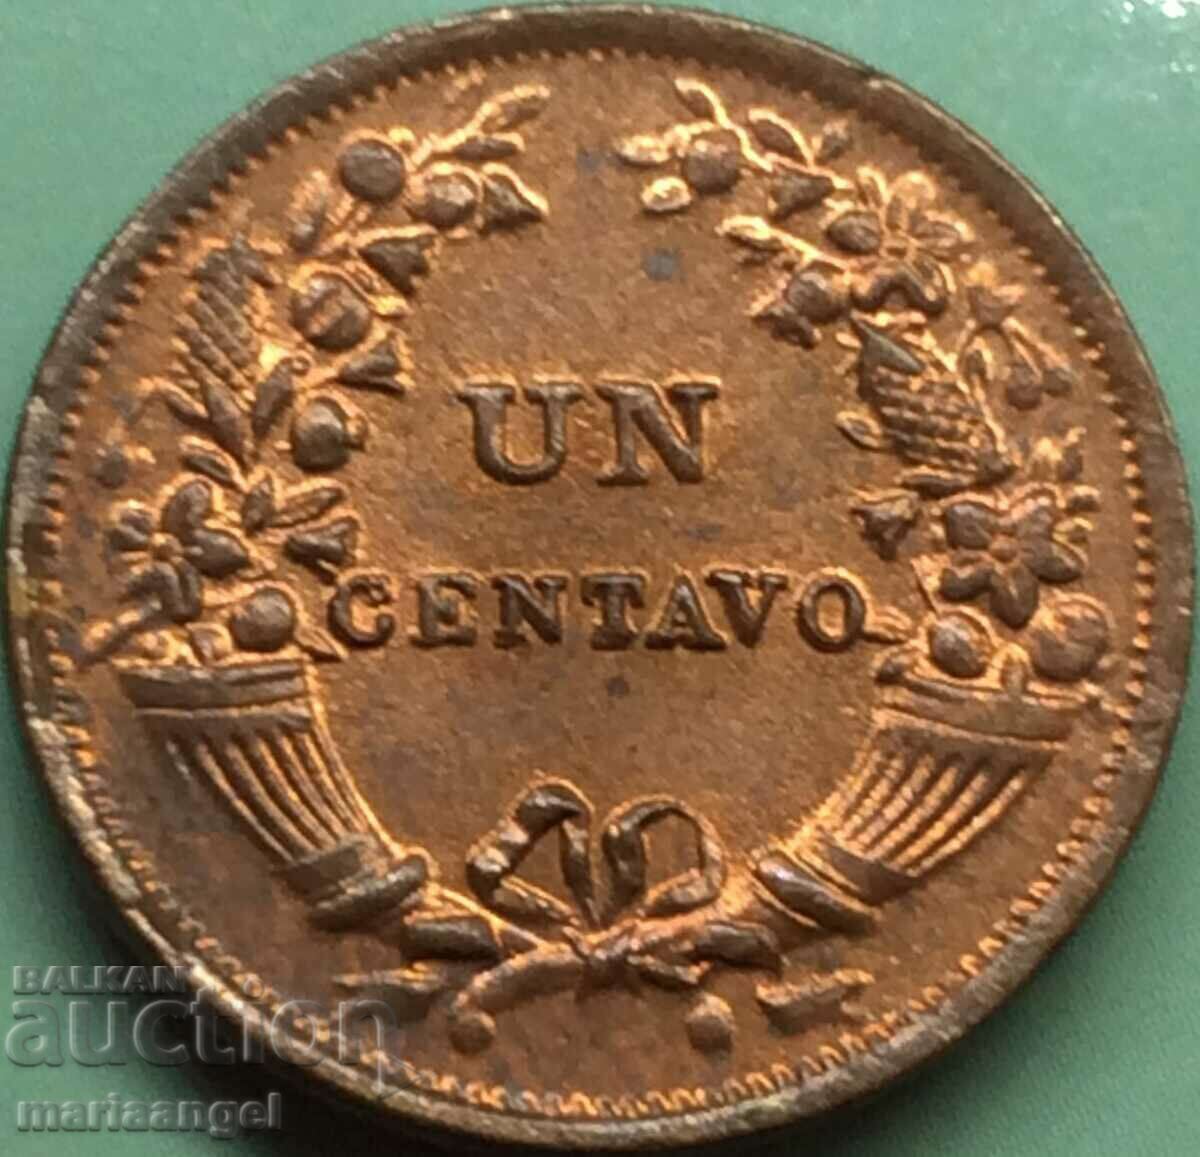 Peru 1 centavo 1941 copper - quite rare